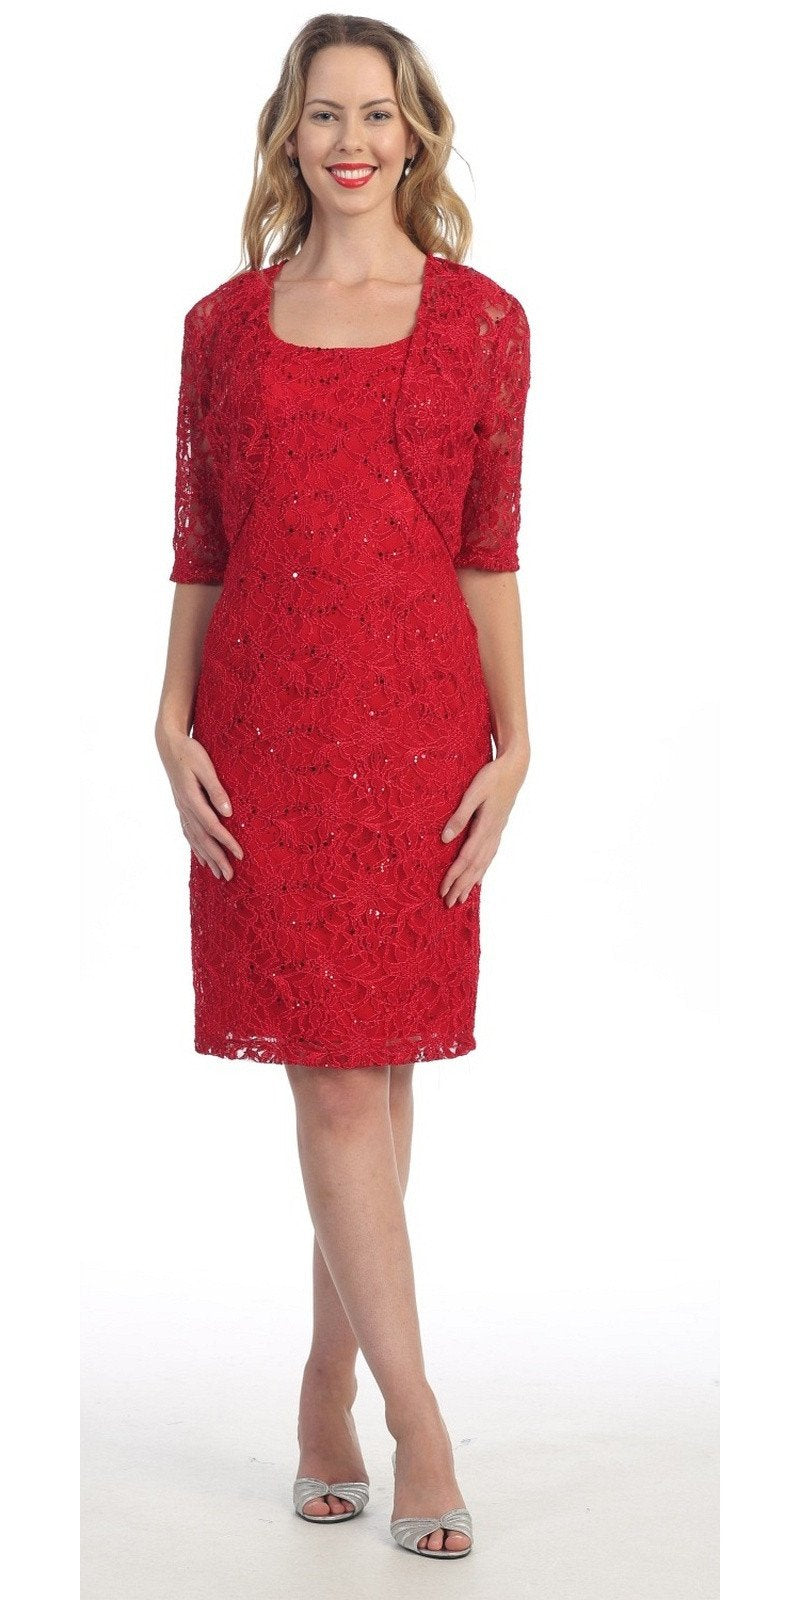 Modest Red Short Lace Dress With Matching Bolero Jacket